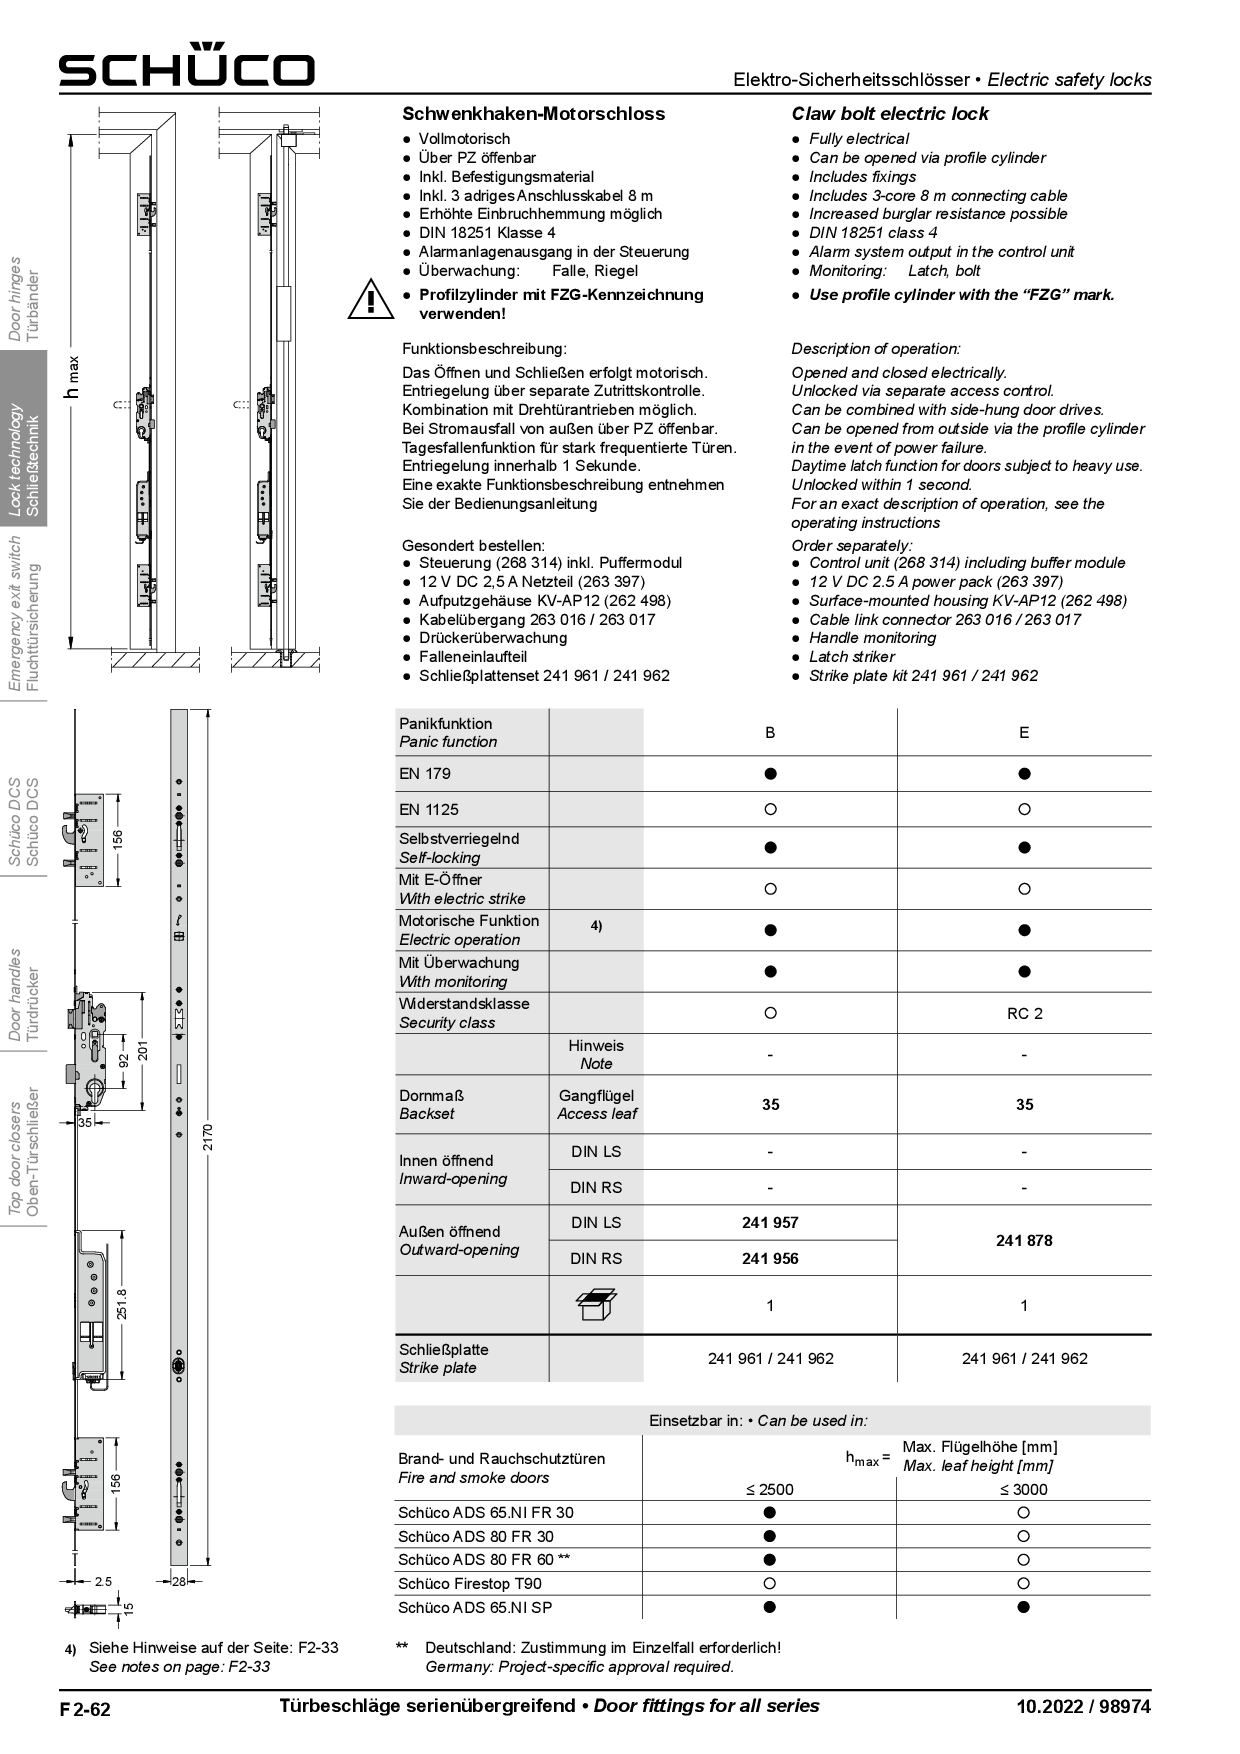 Schüco Schwenkhaken-Motorschloss mit Antipanikfunktion E, 241878